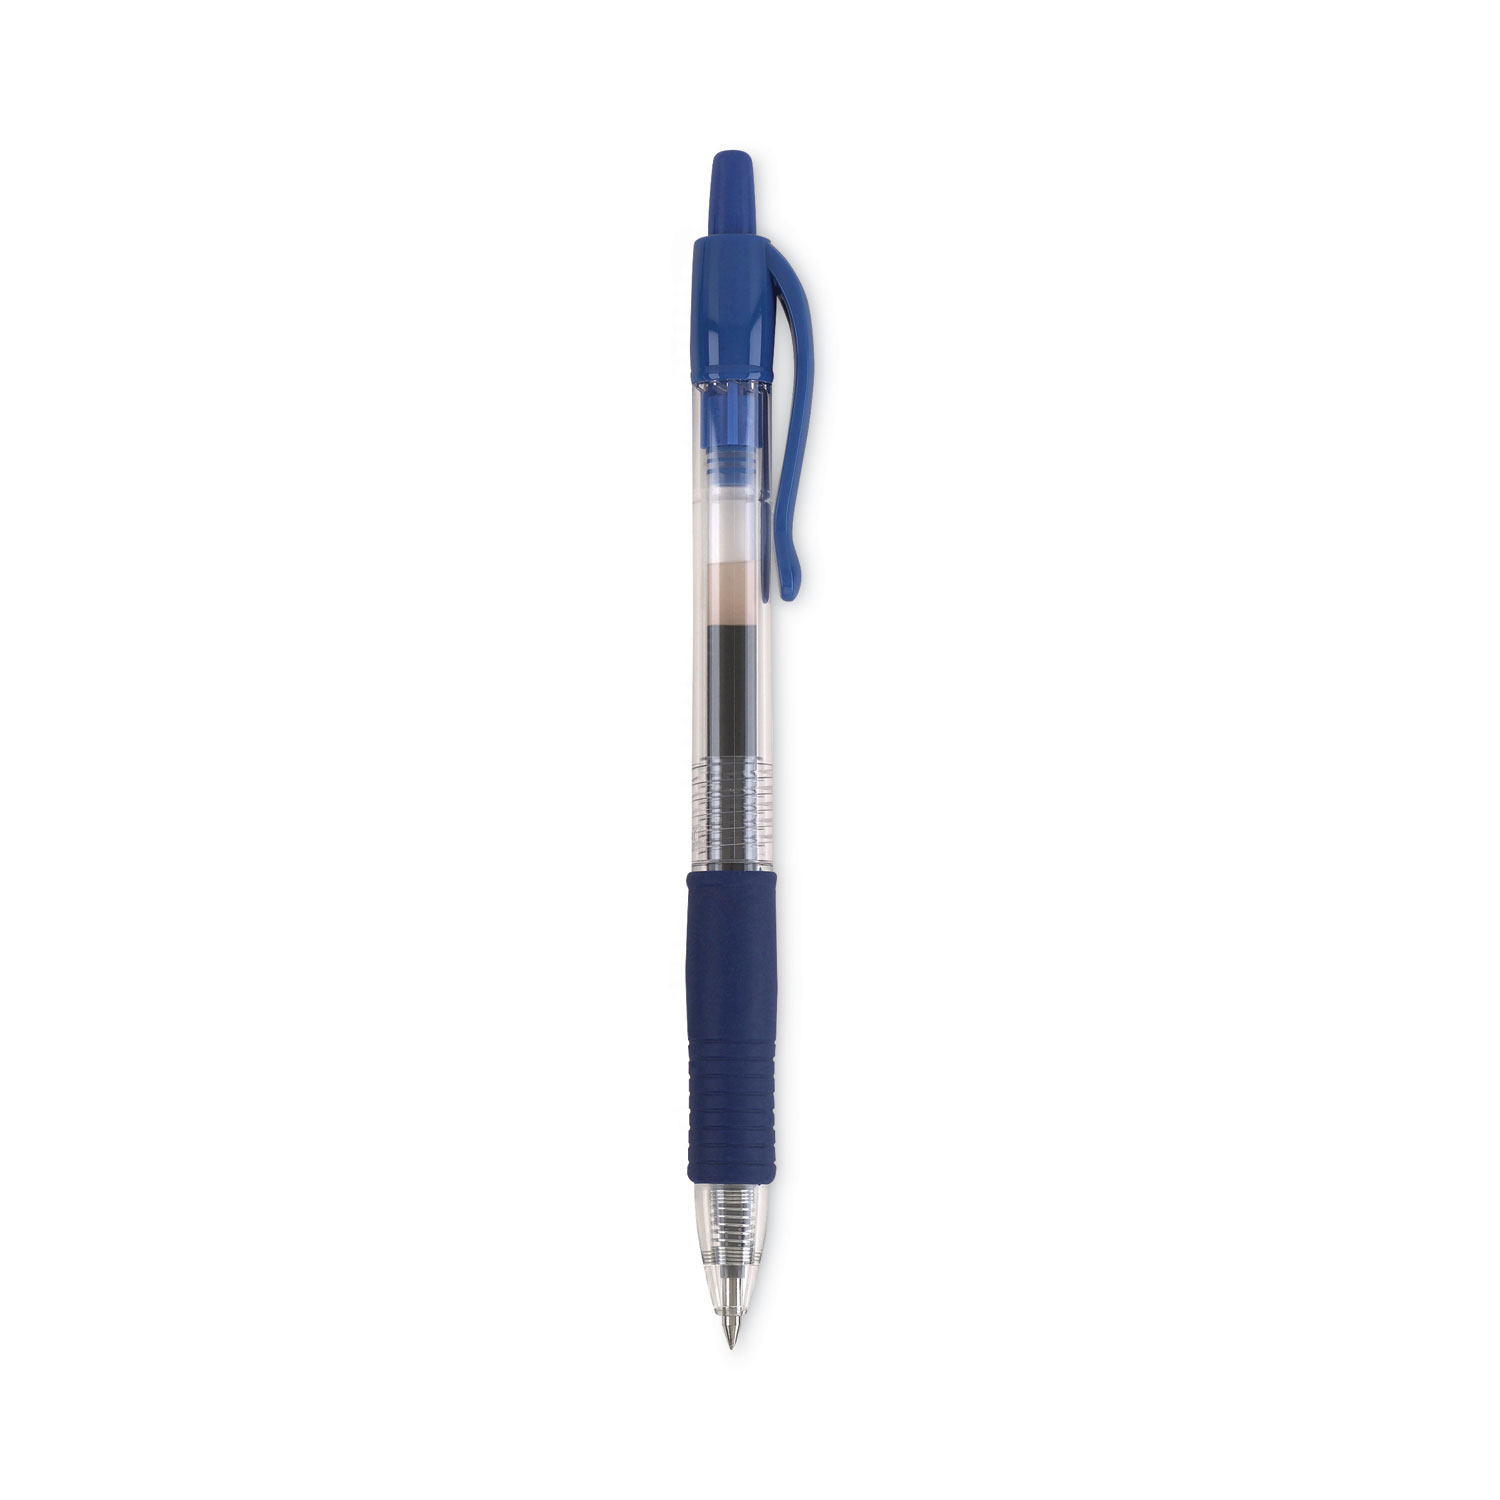 Pilot Precise BeGreen Retractable Gel Pen, Fine Point, 12 / Box